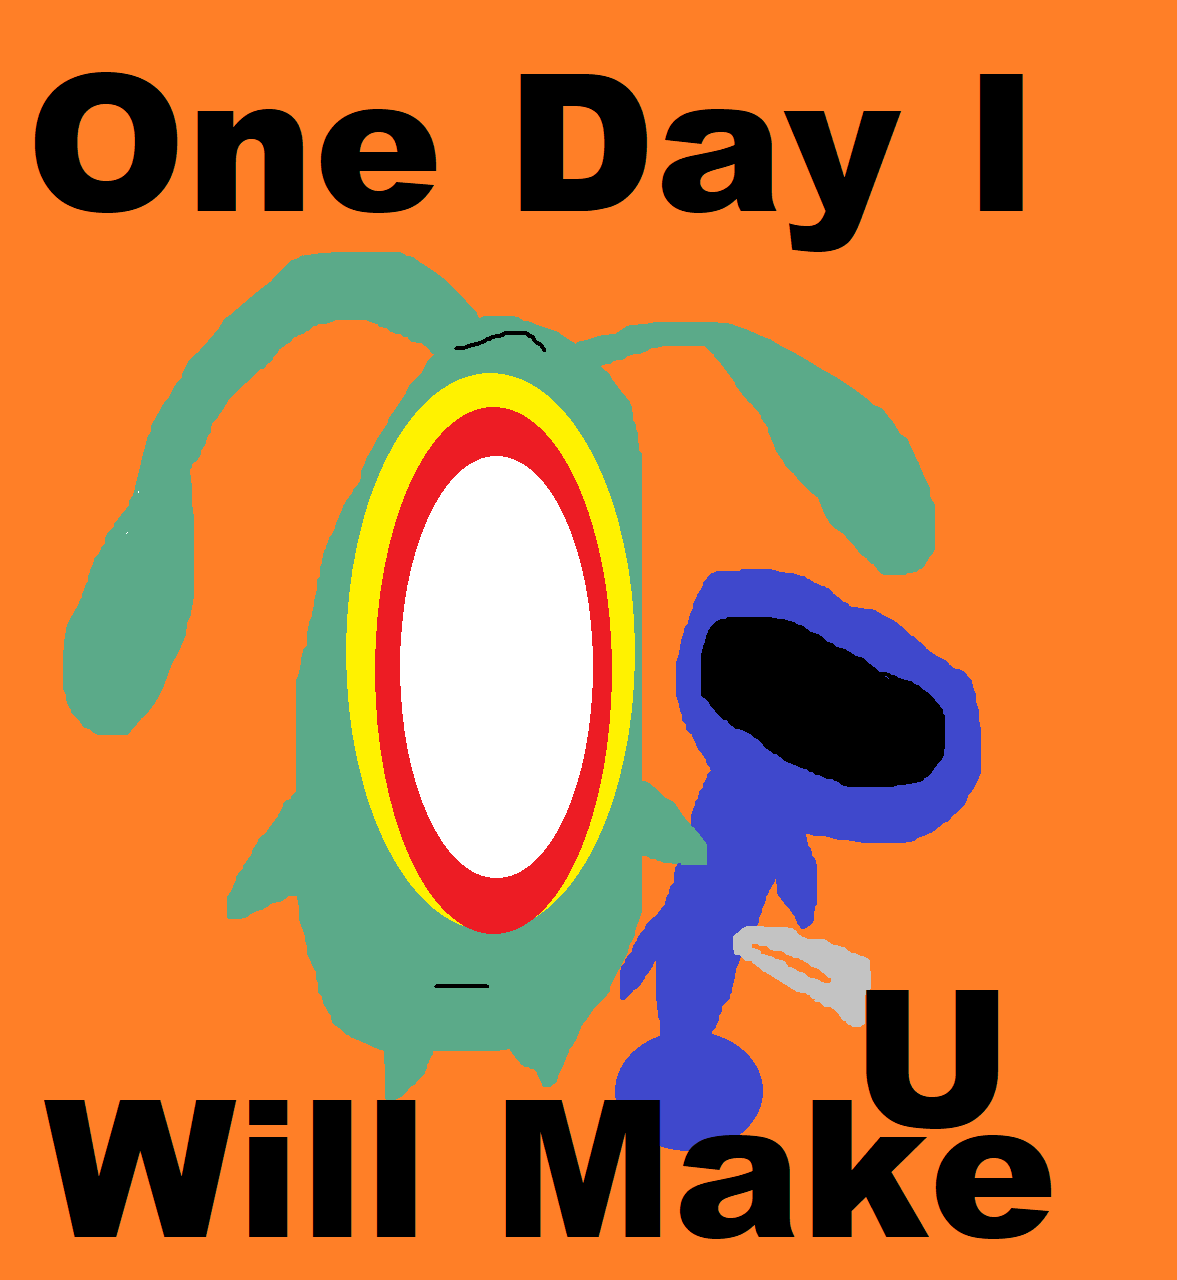 One Day I Will Make U by Falconlobo